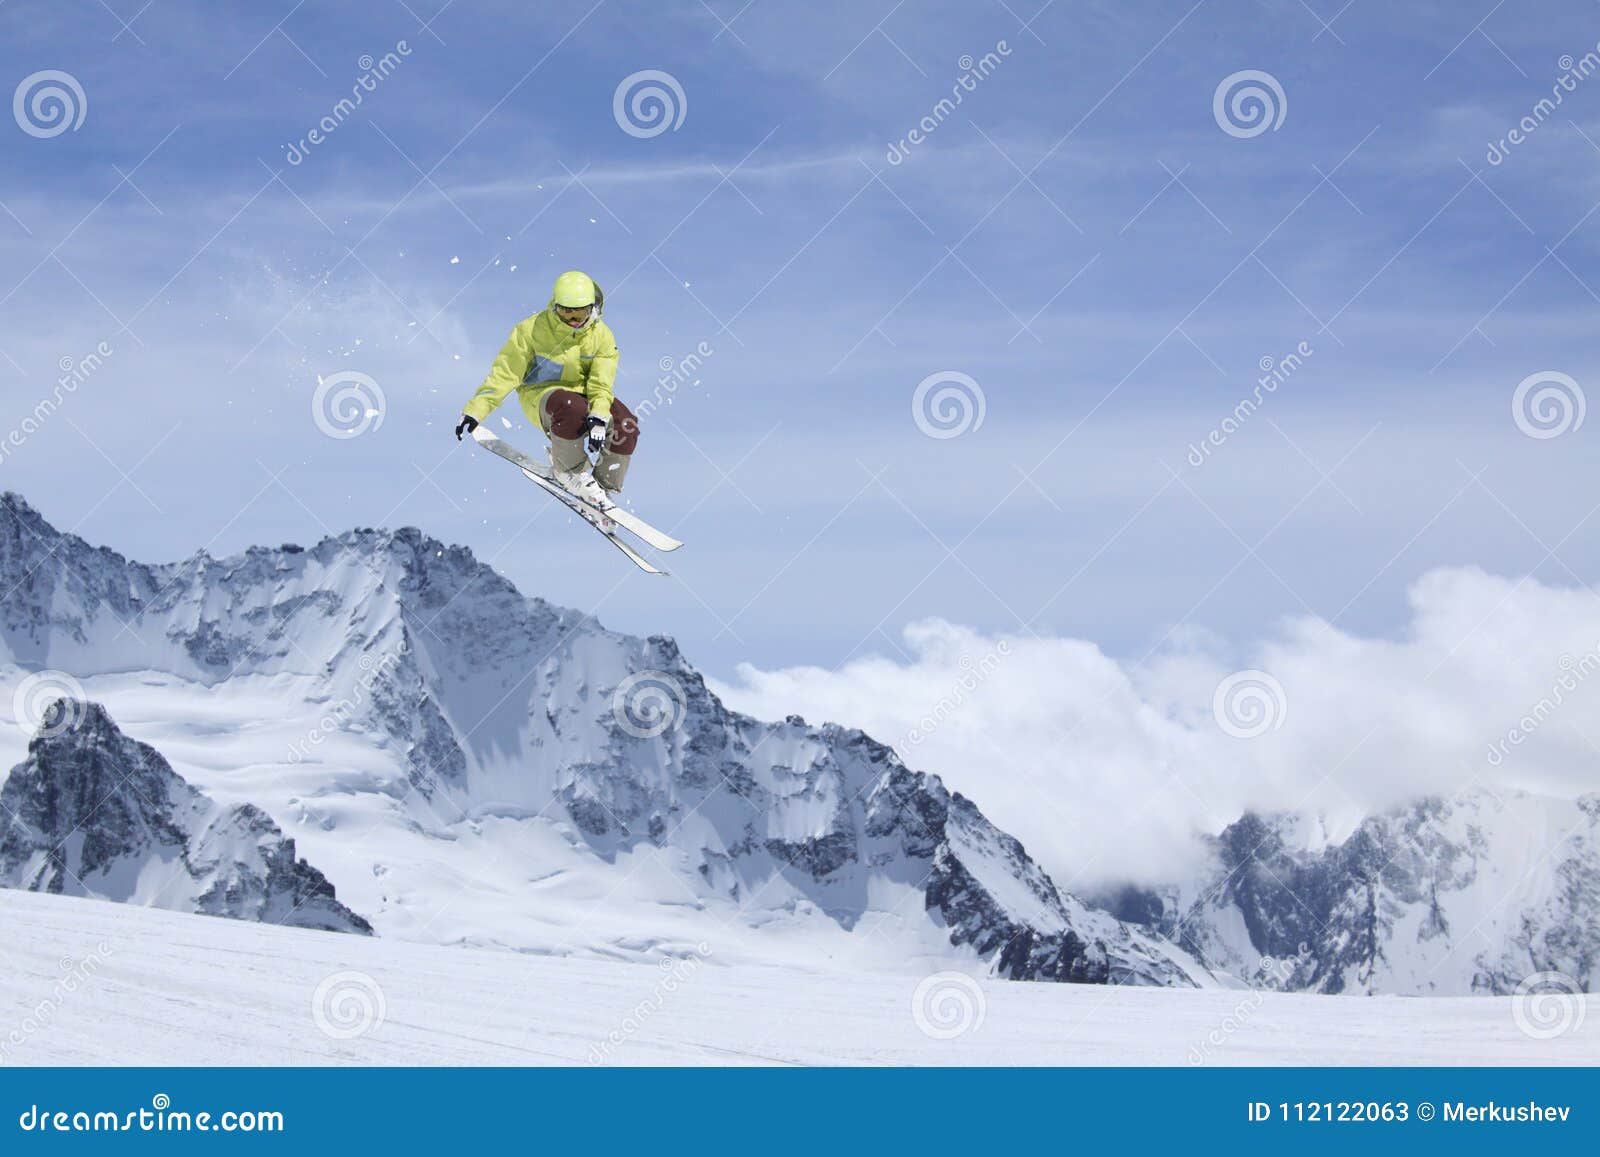 skier-jump-mountains-extreme-ski-sport-freeride-skier-jump-snowy-mountains-extreme-ski-sport-freeride-112122063 5 Brilliant Ways To Use clothing abskisport